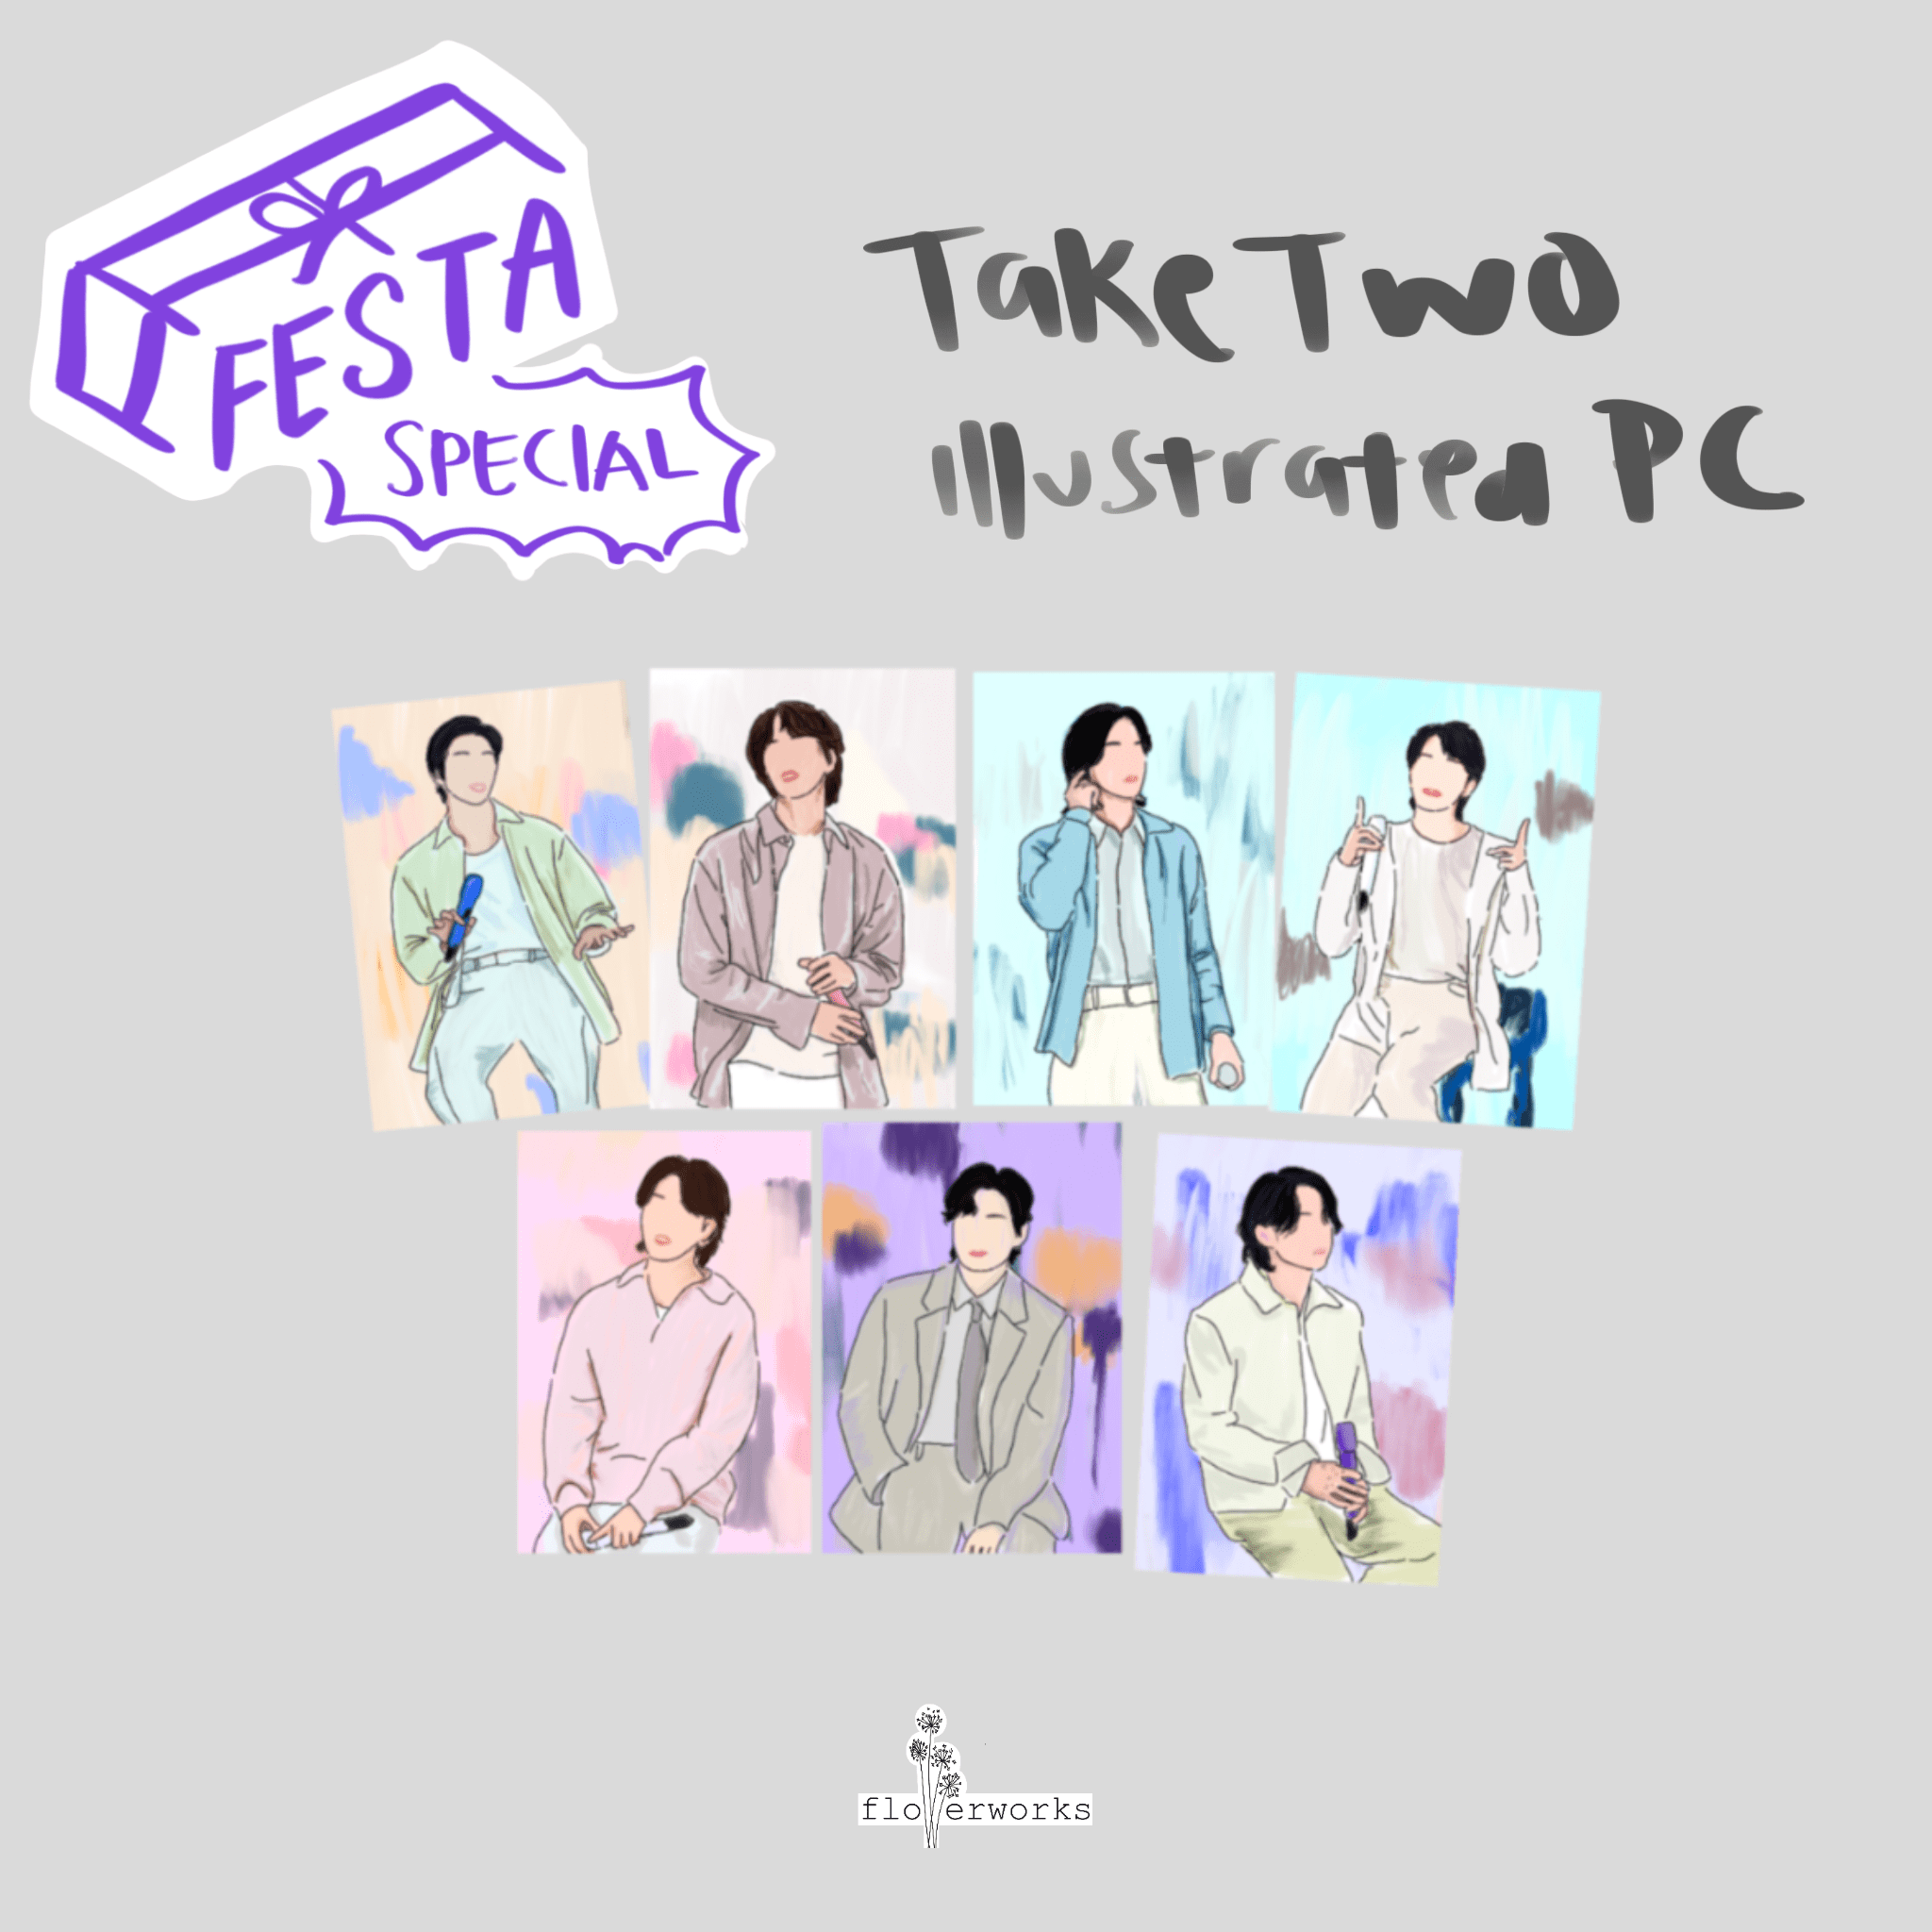 Festa Special: Take Two Artprint BTS